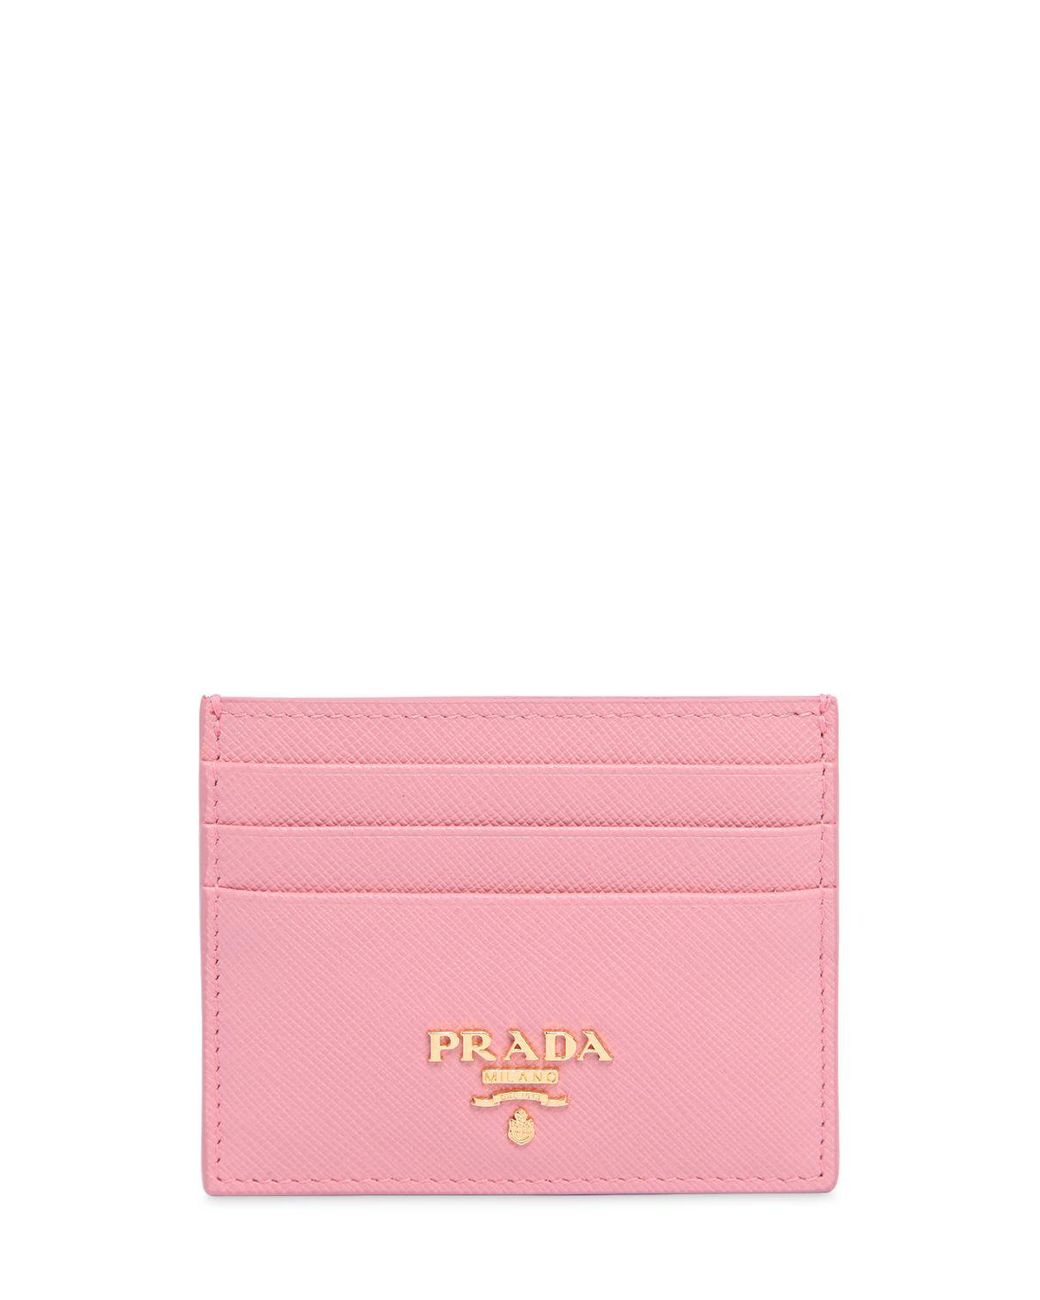 Prada Saffiano Leather Card Holder in Pink | Lyst